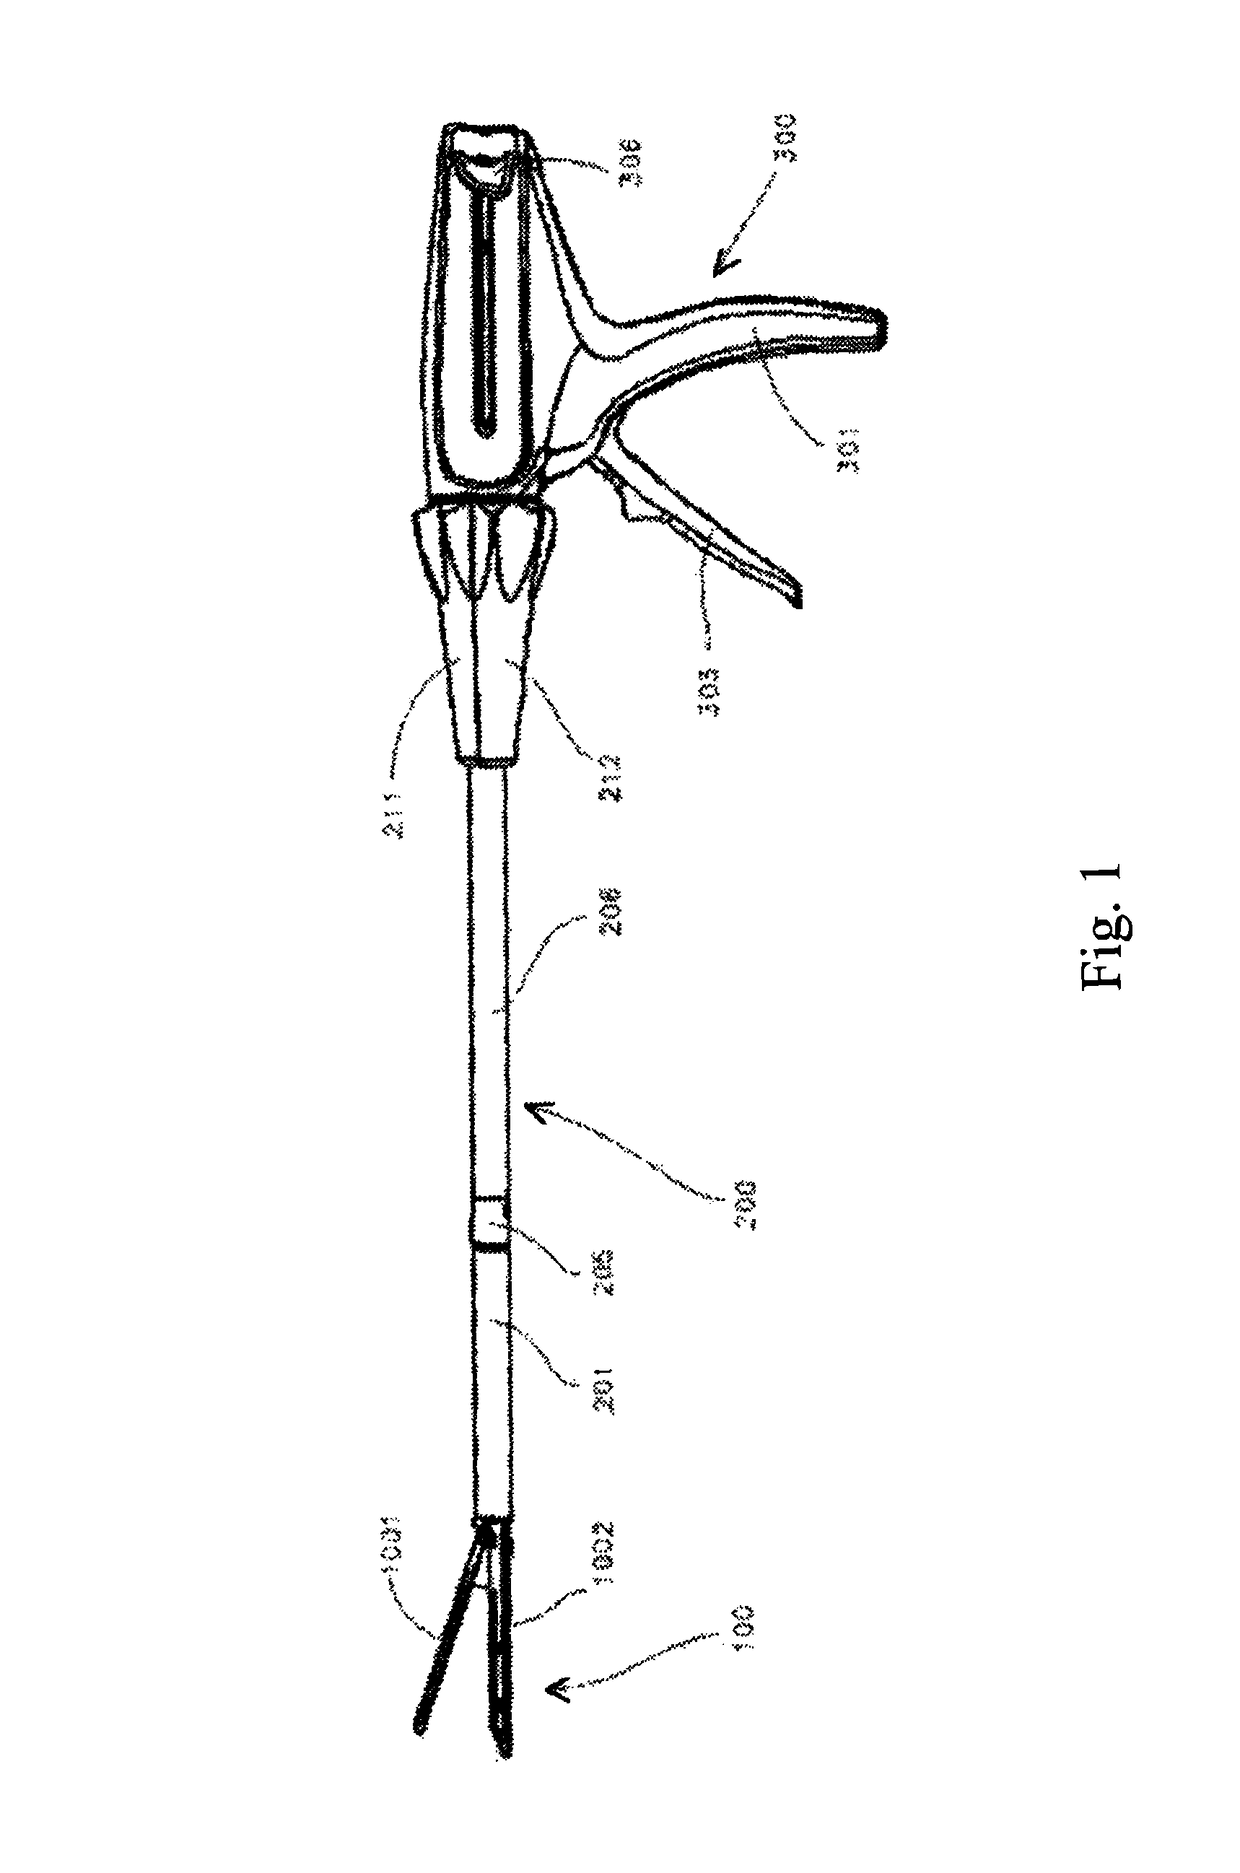 Surgical apparatus actuator